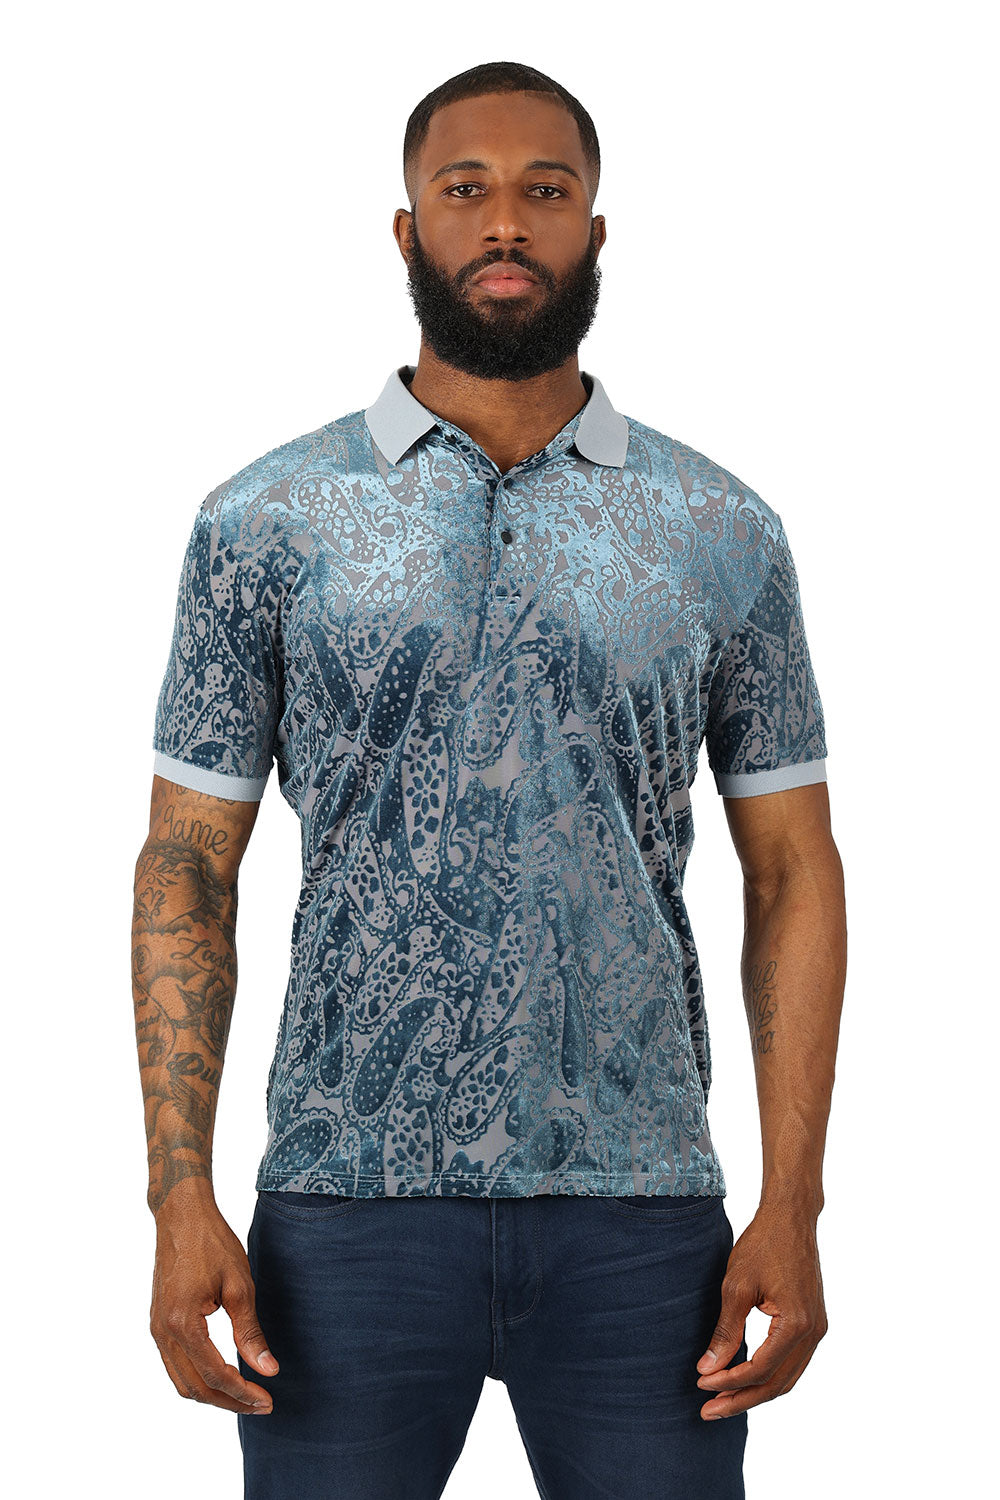 Barabas Men's Floral Paisley Short Sleeve Polo Shirts 3PP836 Blue 